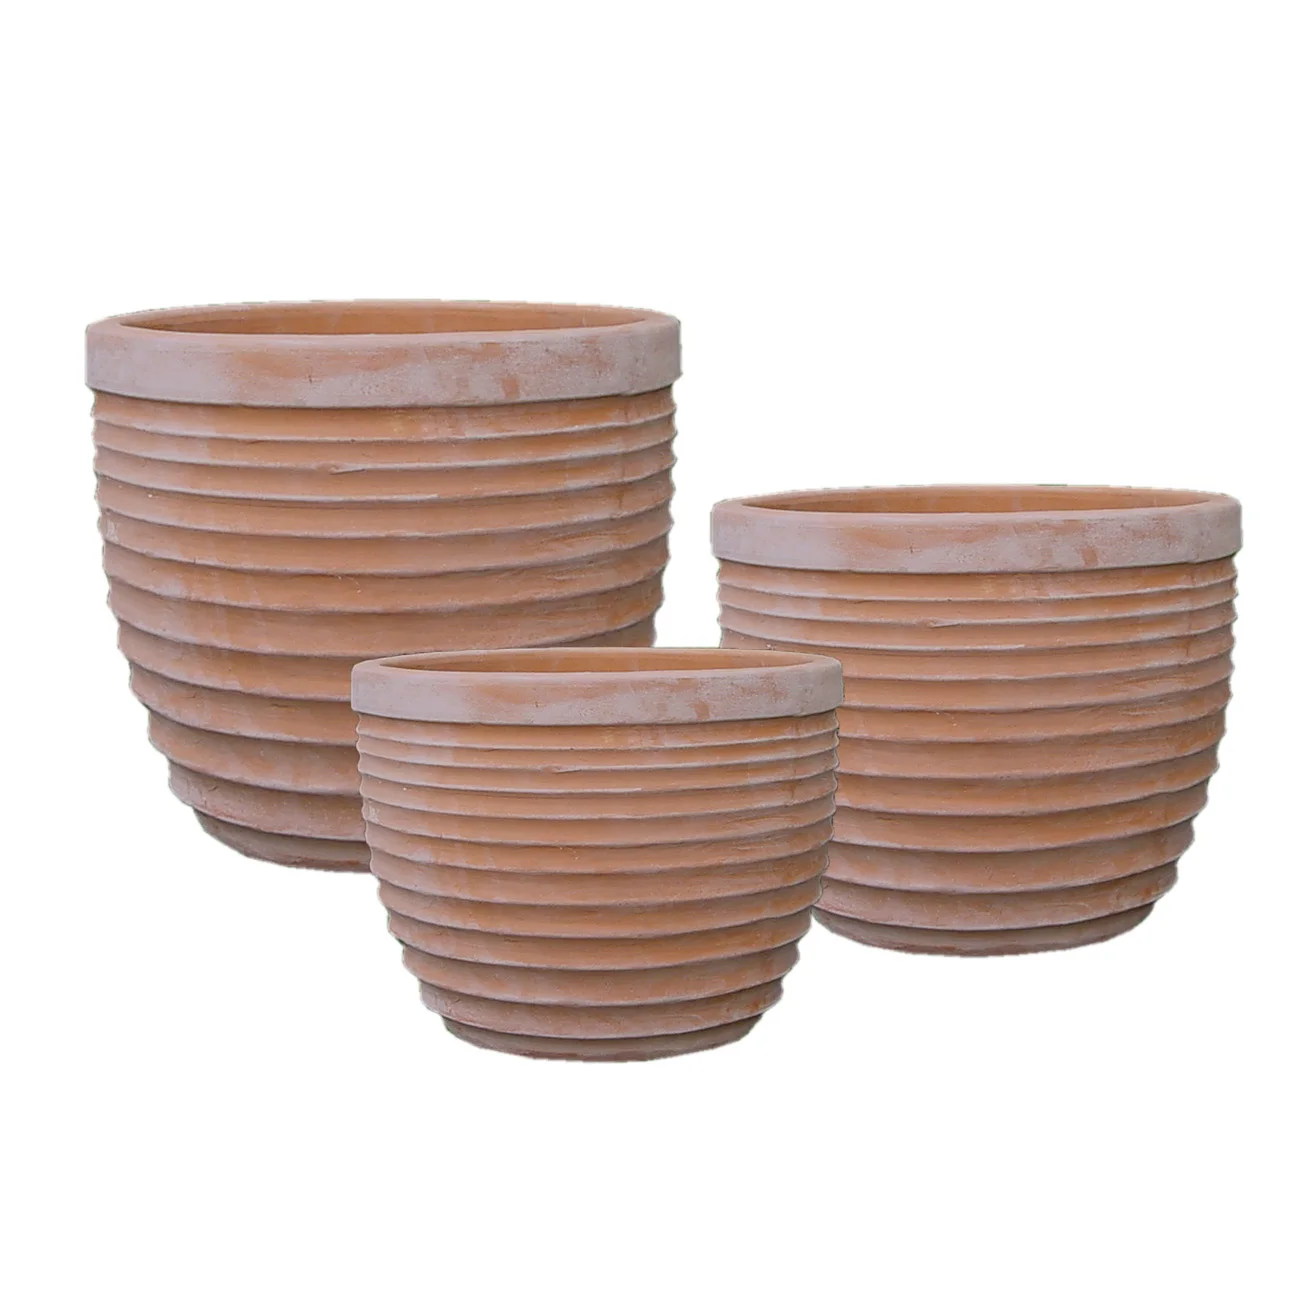 Beautiful Handmade Ceramic Terracotta Pot for Flowers & Plants Medium Size Planter for Garden Nursery Room & Party Decor